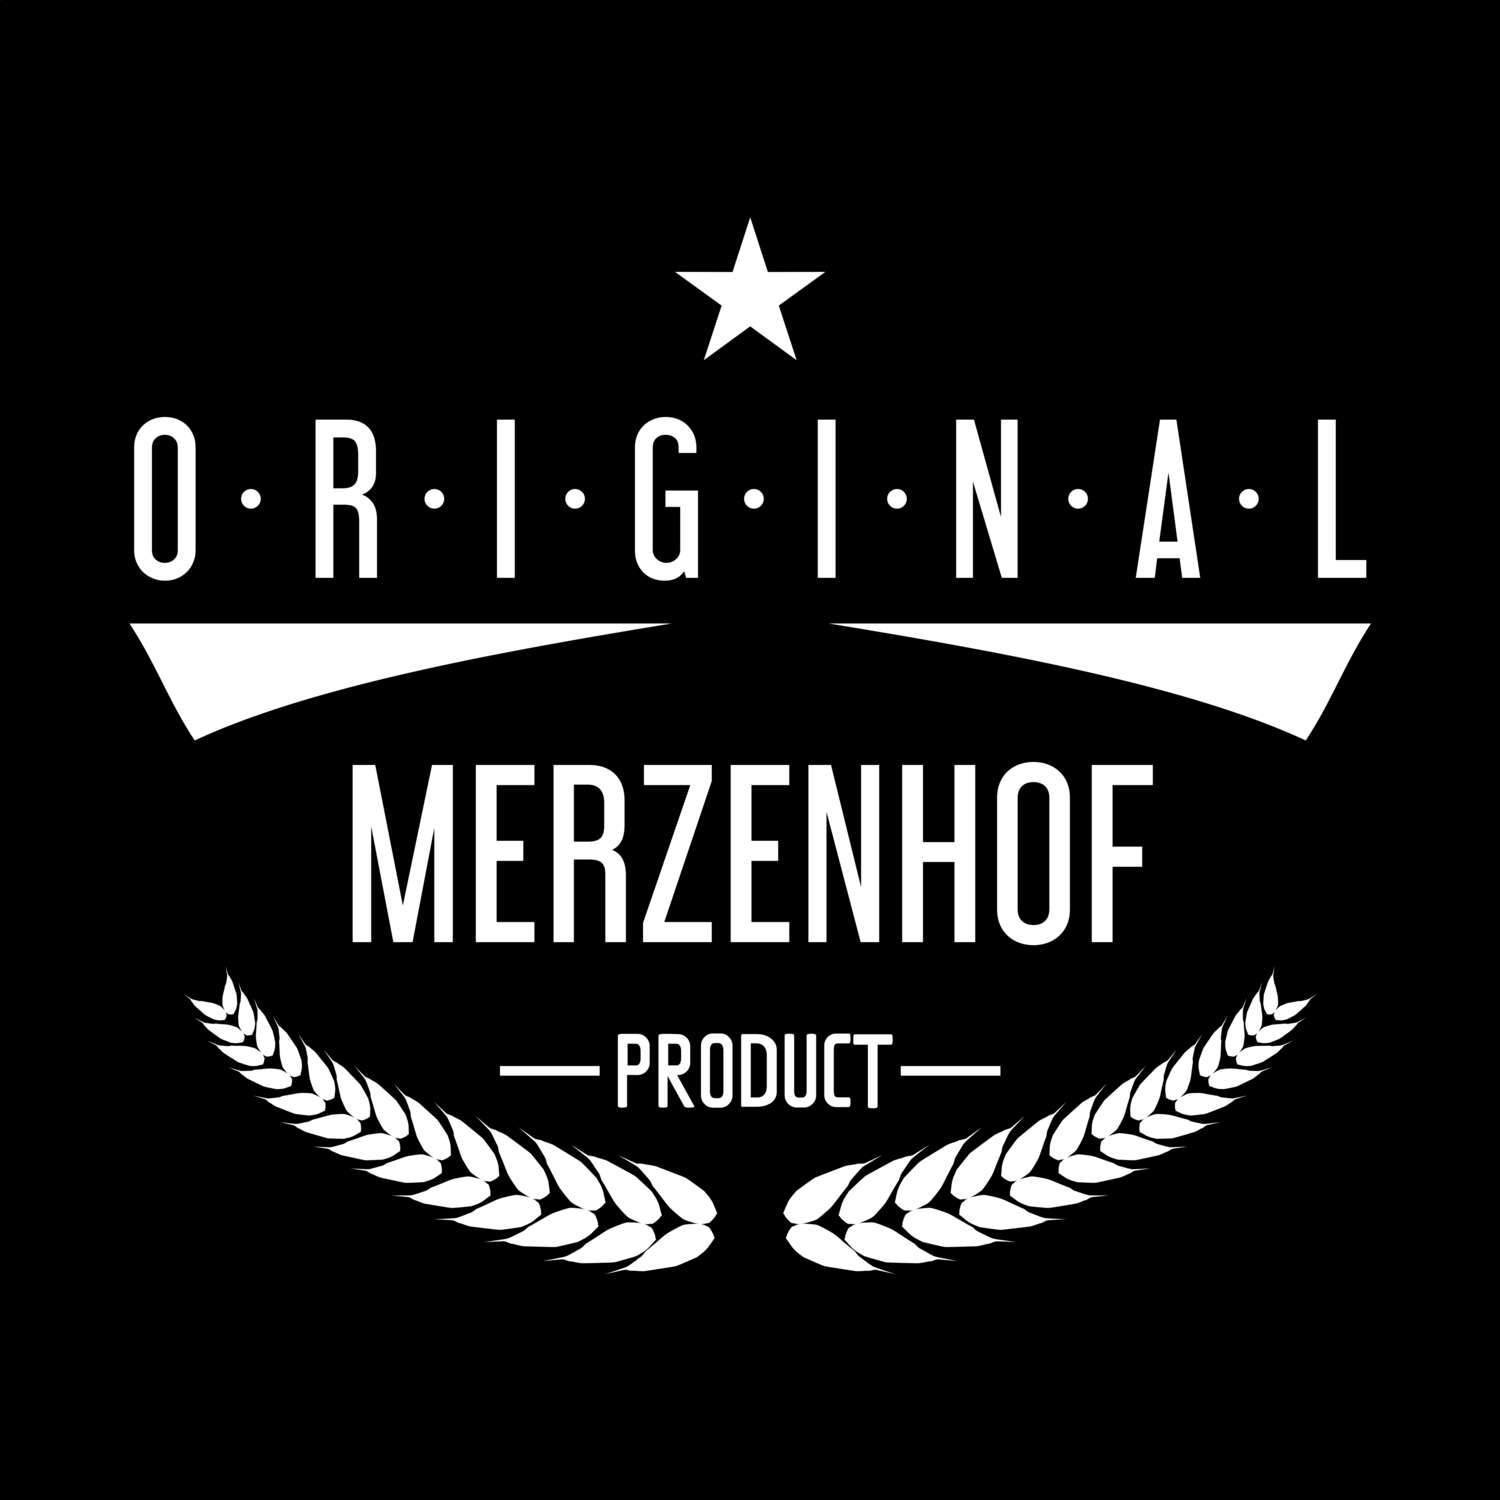 Merzenhof T-Shirt »Original Product«